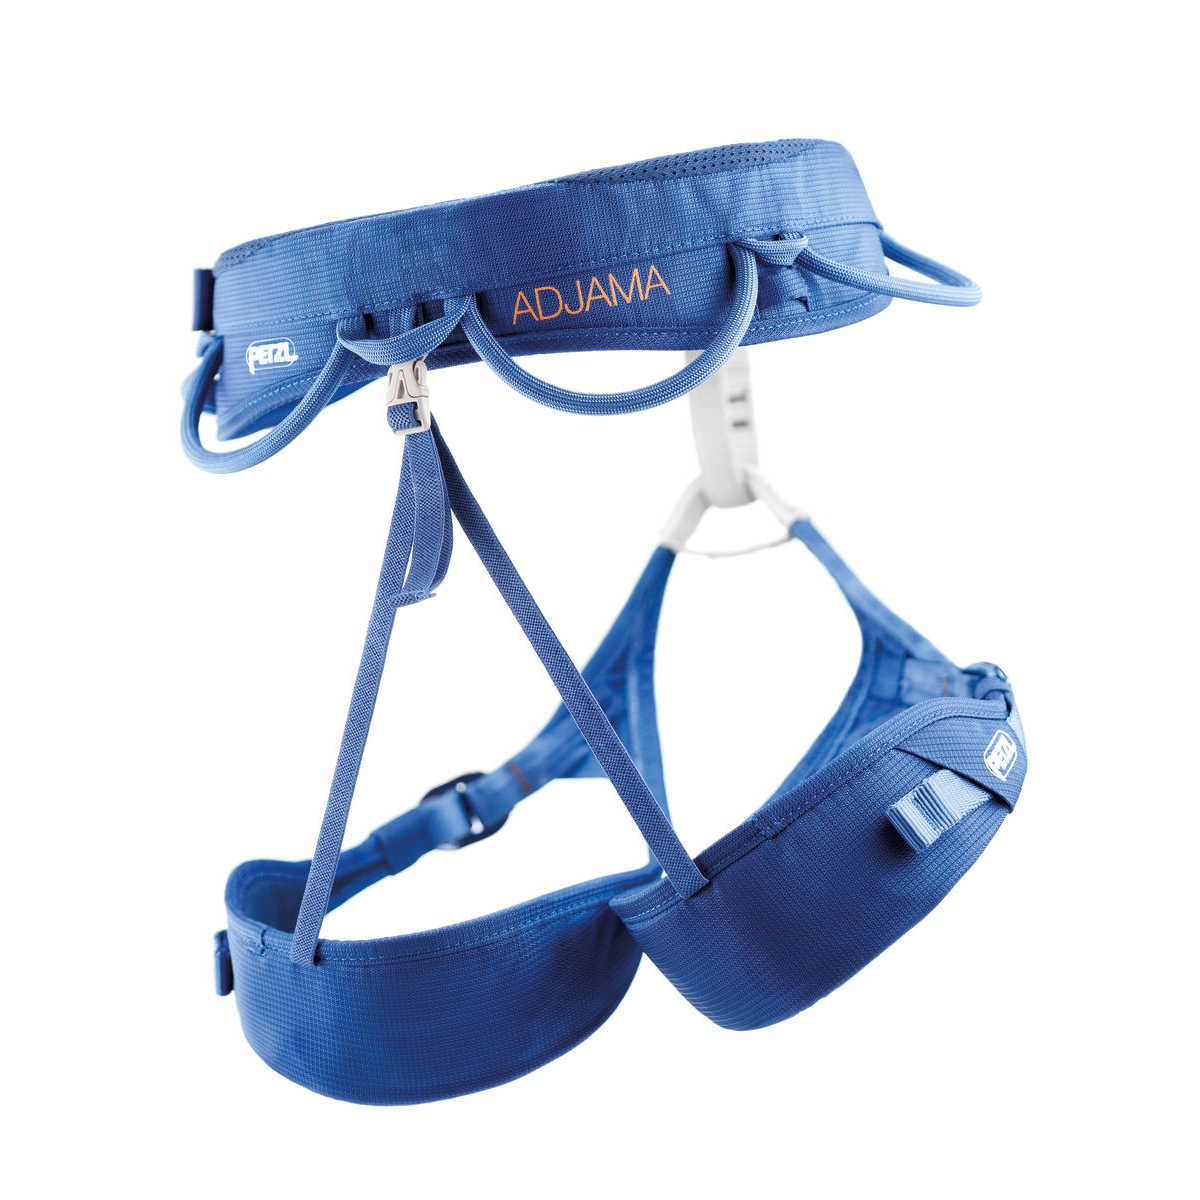 Adjama - Bleu